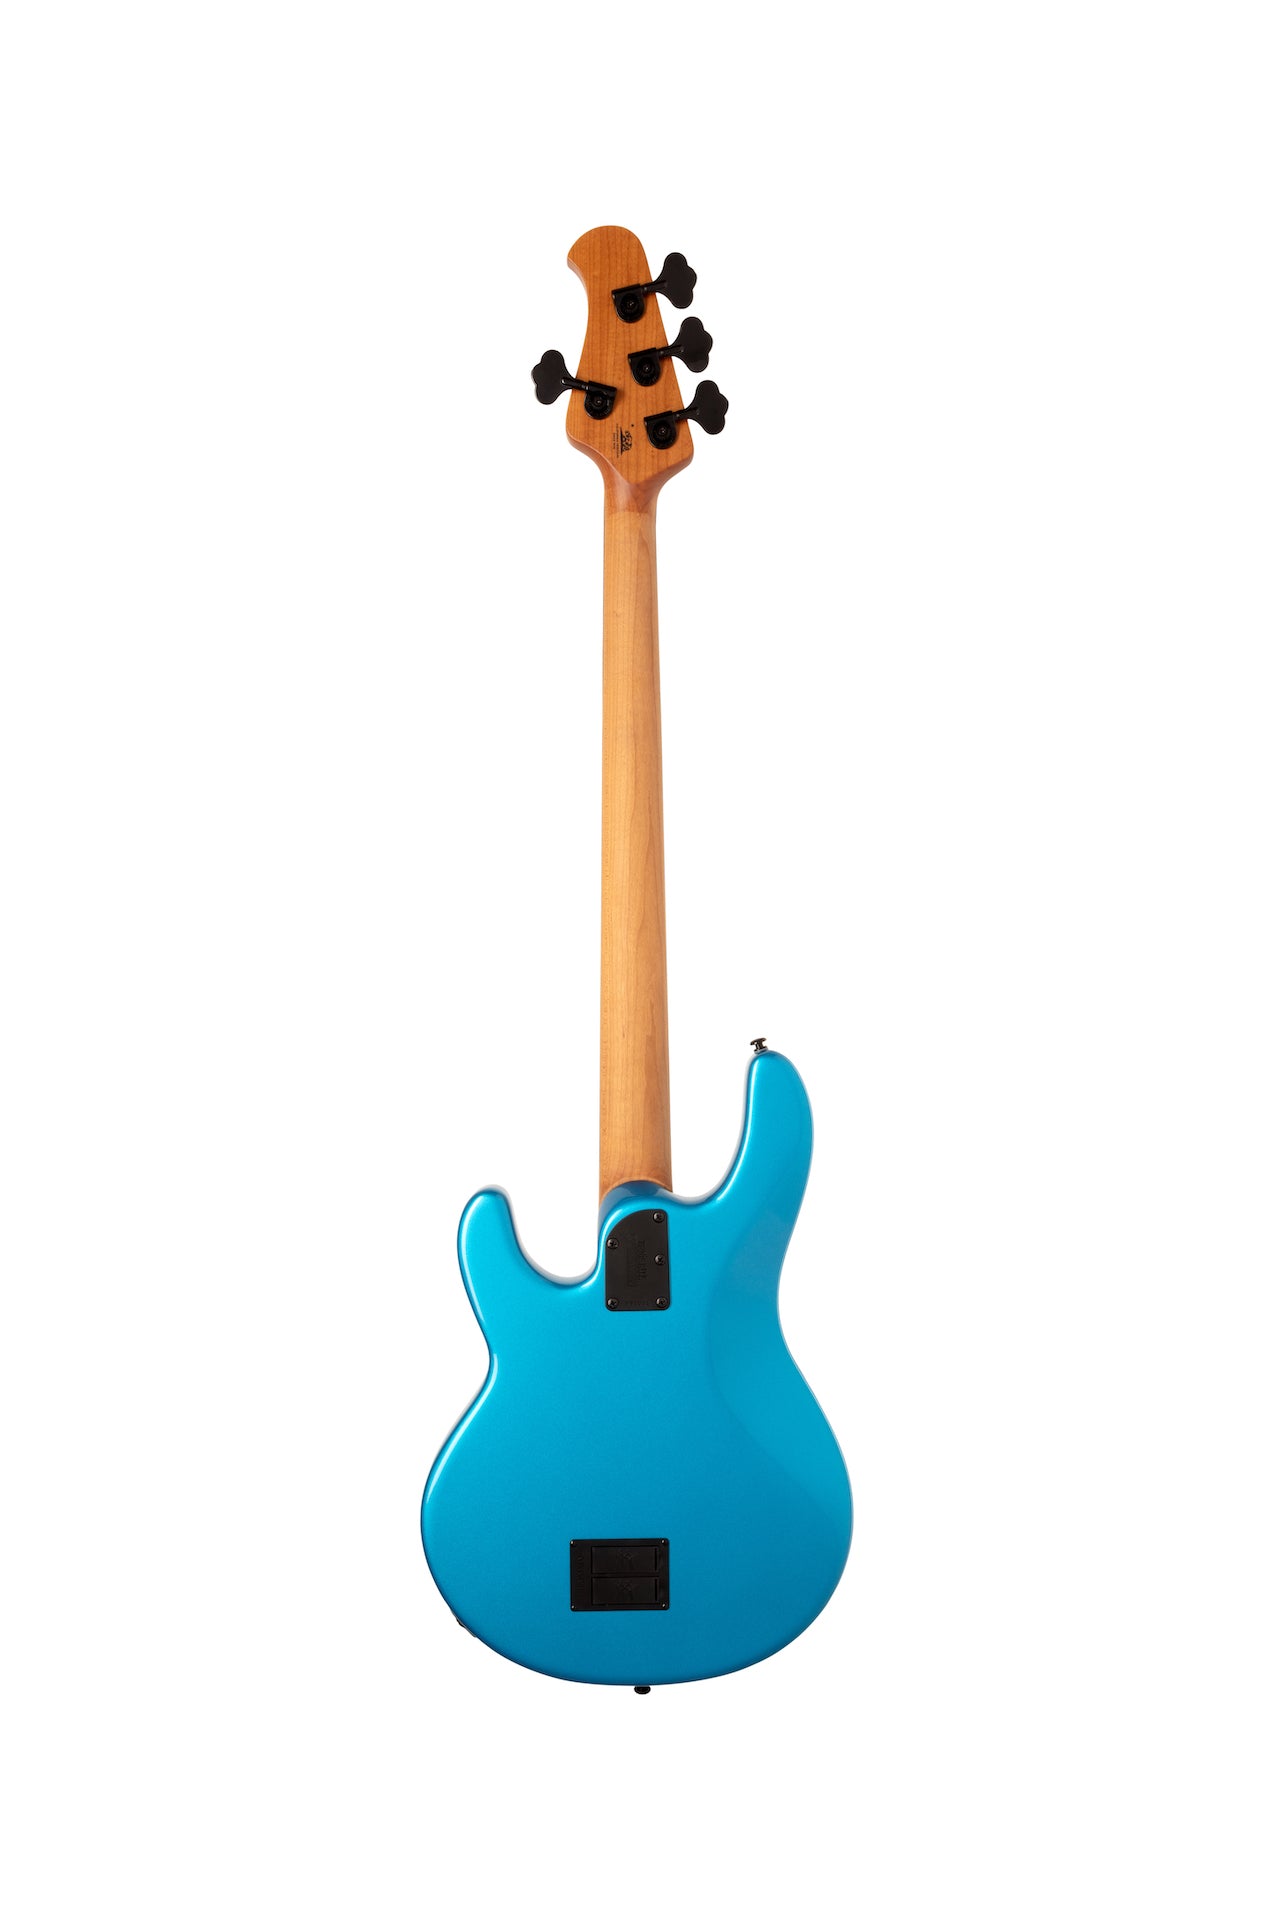 Ernie Ball Music Man StingRay Special 4 H Bass Guitar - Speed Blue with Rosewood Fingerboard F96542 - HIENDGUITAR   Musicman bass